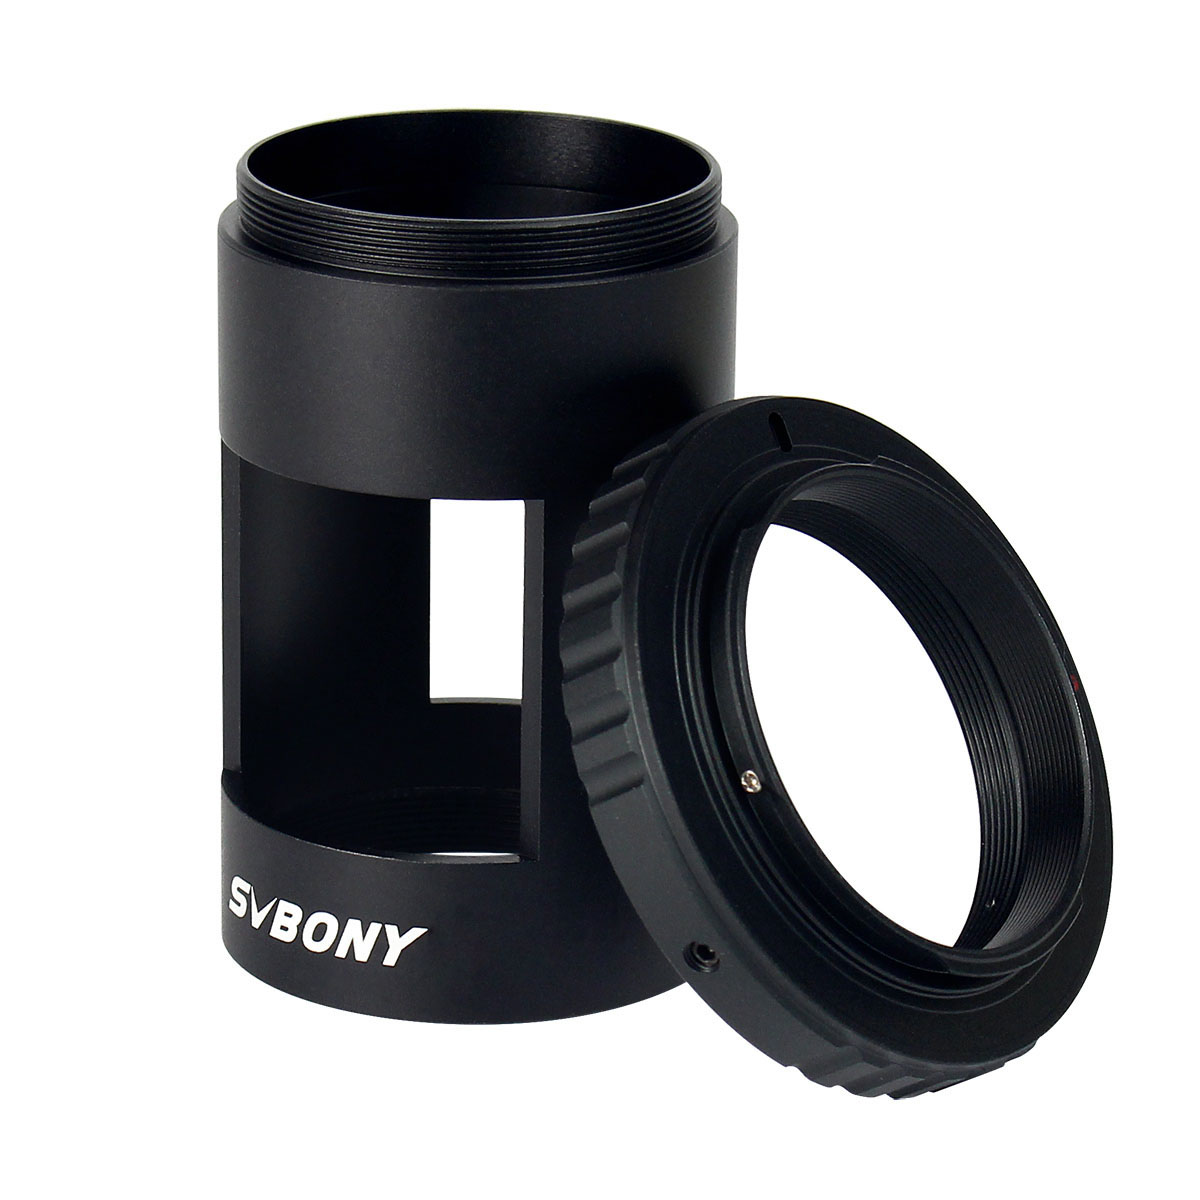 SVBONY-Full-Metal-Spotting-Scope-Camera-Adapter-Fits-Eyepiece-OD-475mm-w-T-Ring-1817318-2